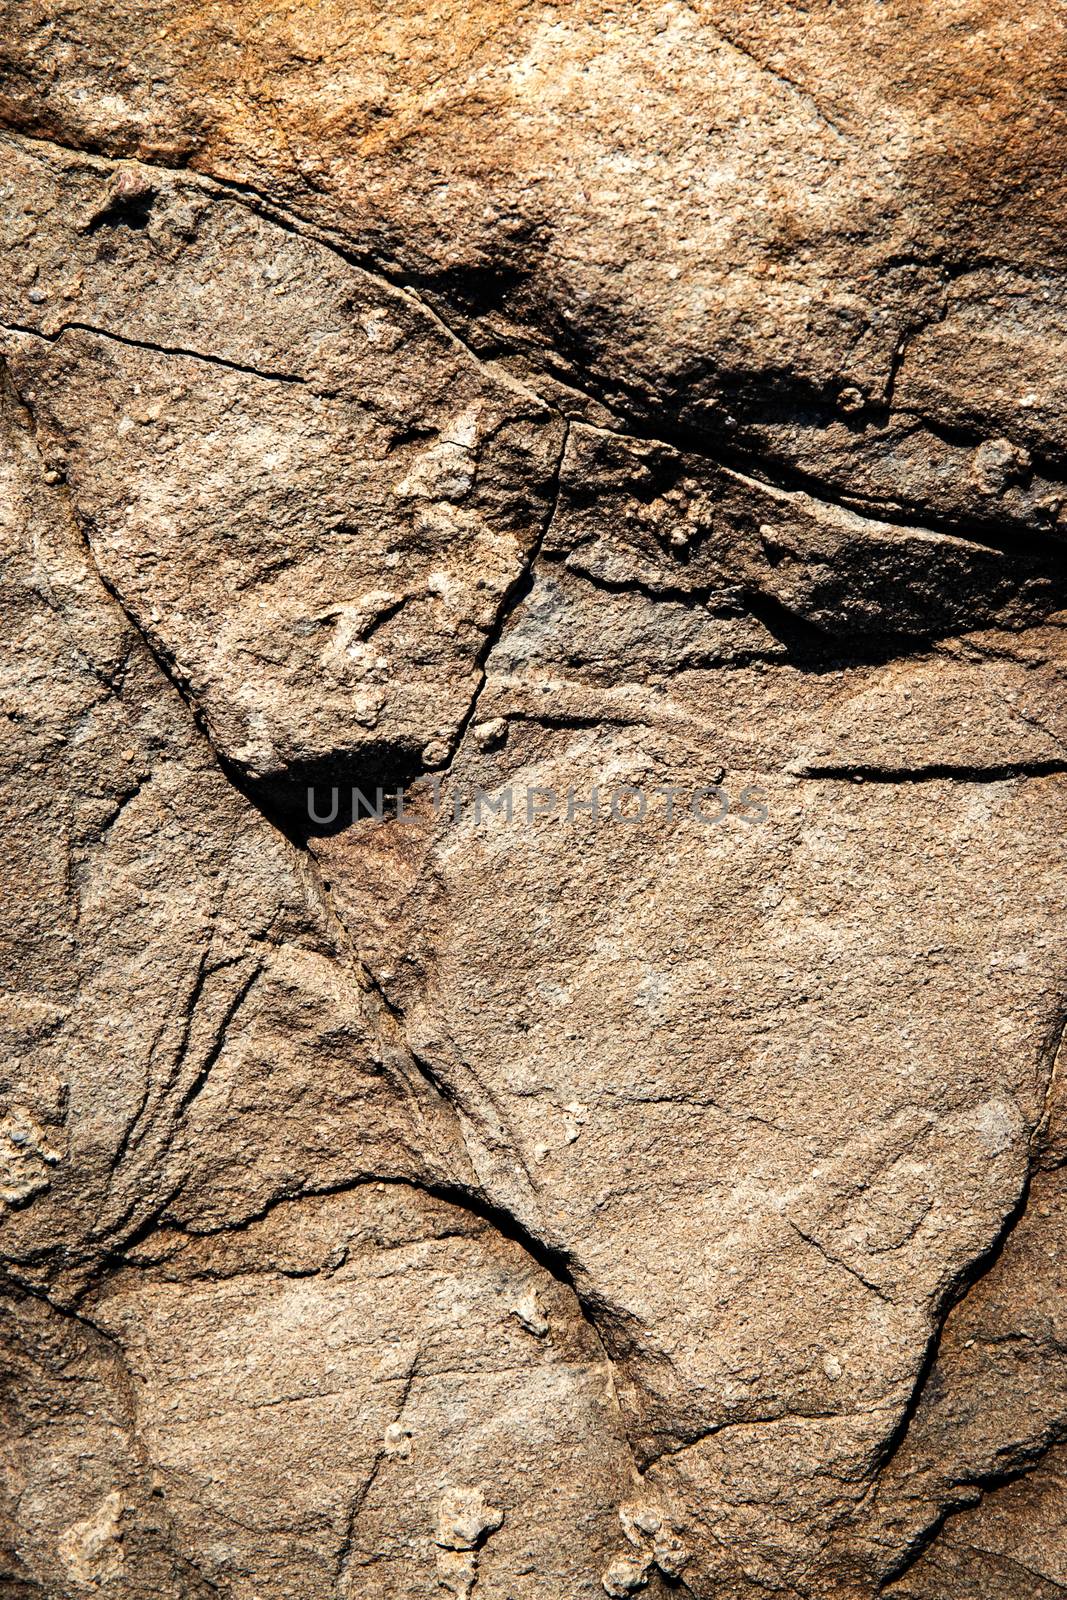 detail crack in sandstone rock by Ahojdoma